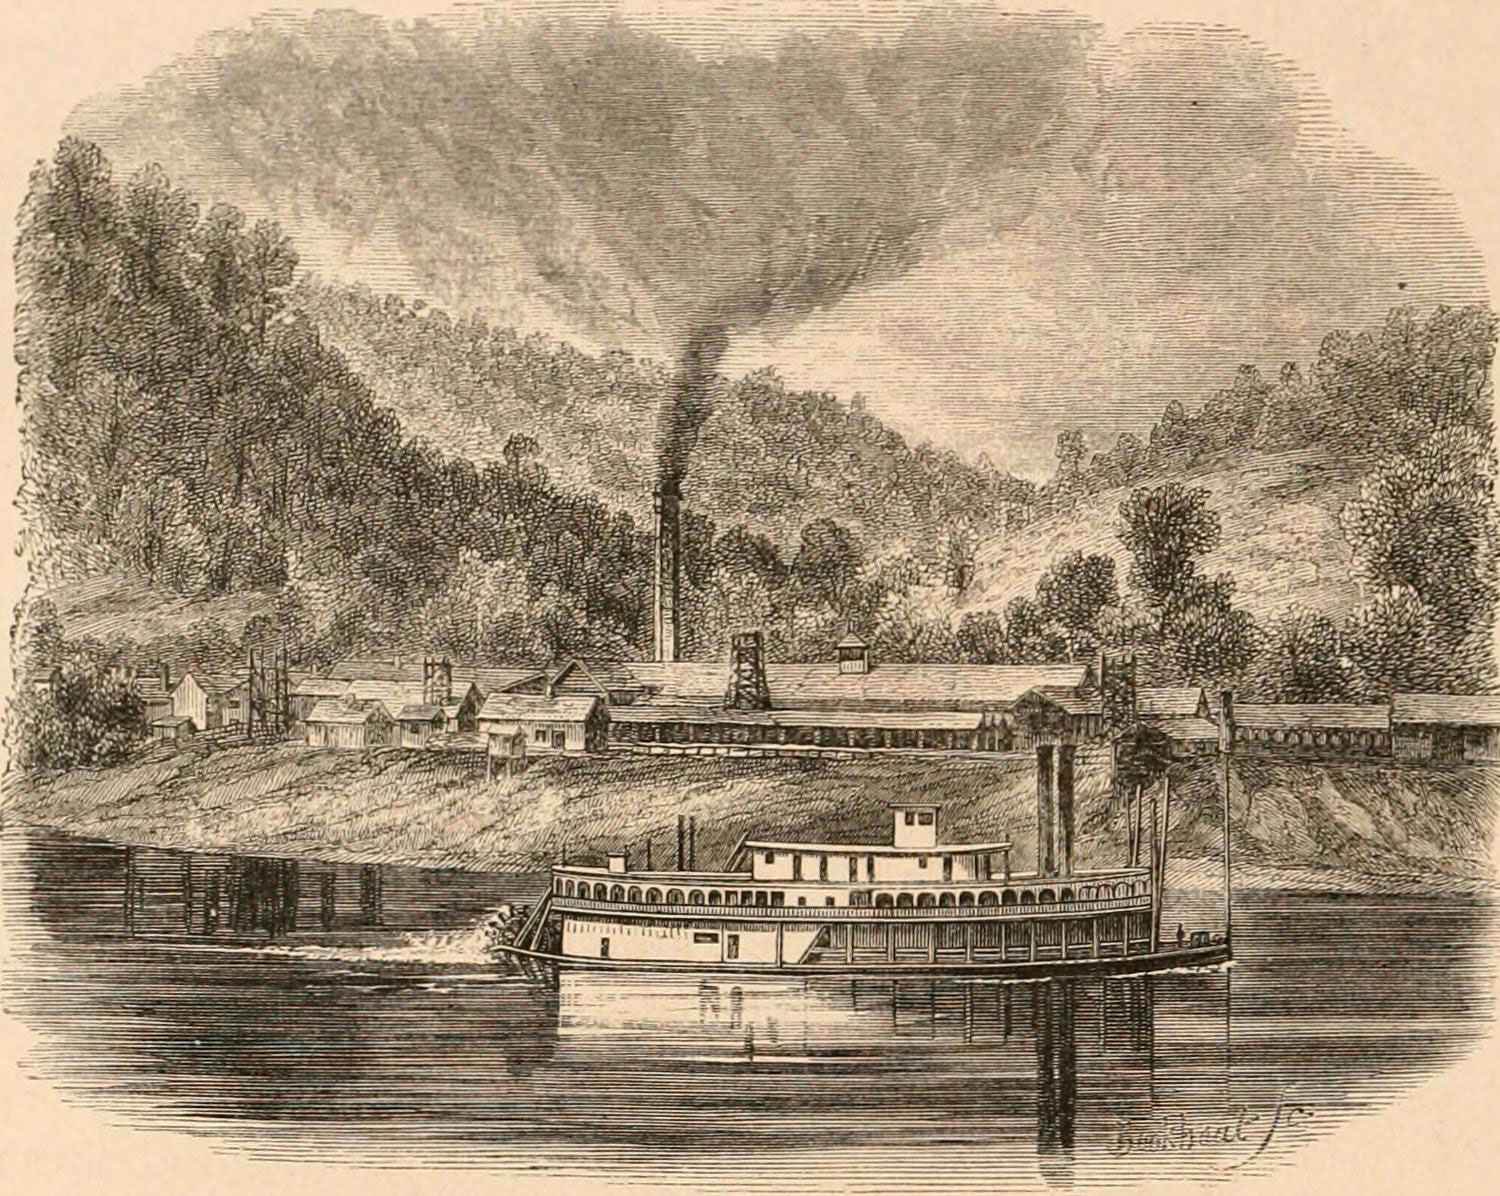 Historical illustration of the Snow Hill Salt Works, Kanawha River, West Virginia.